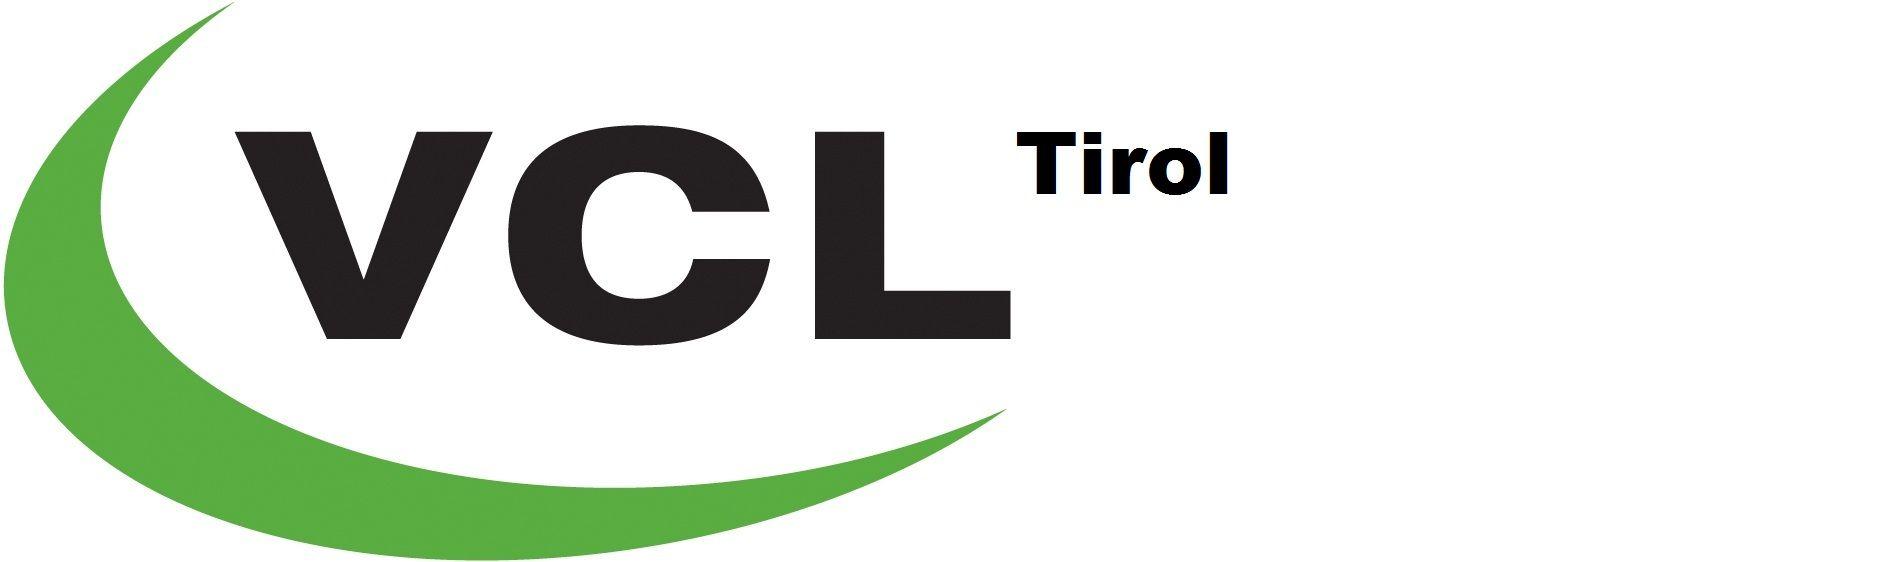 VCL Logo - VCL Tirol - Team - VCL Österreich